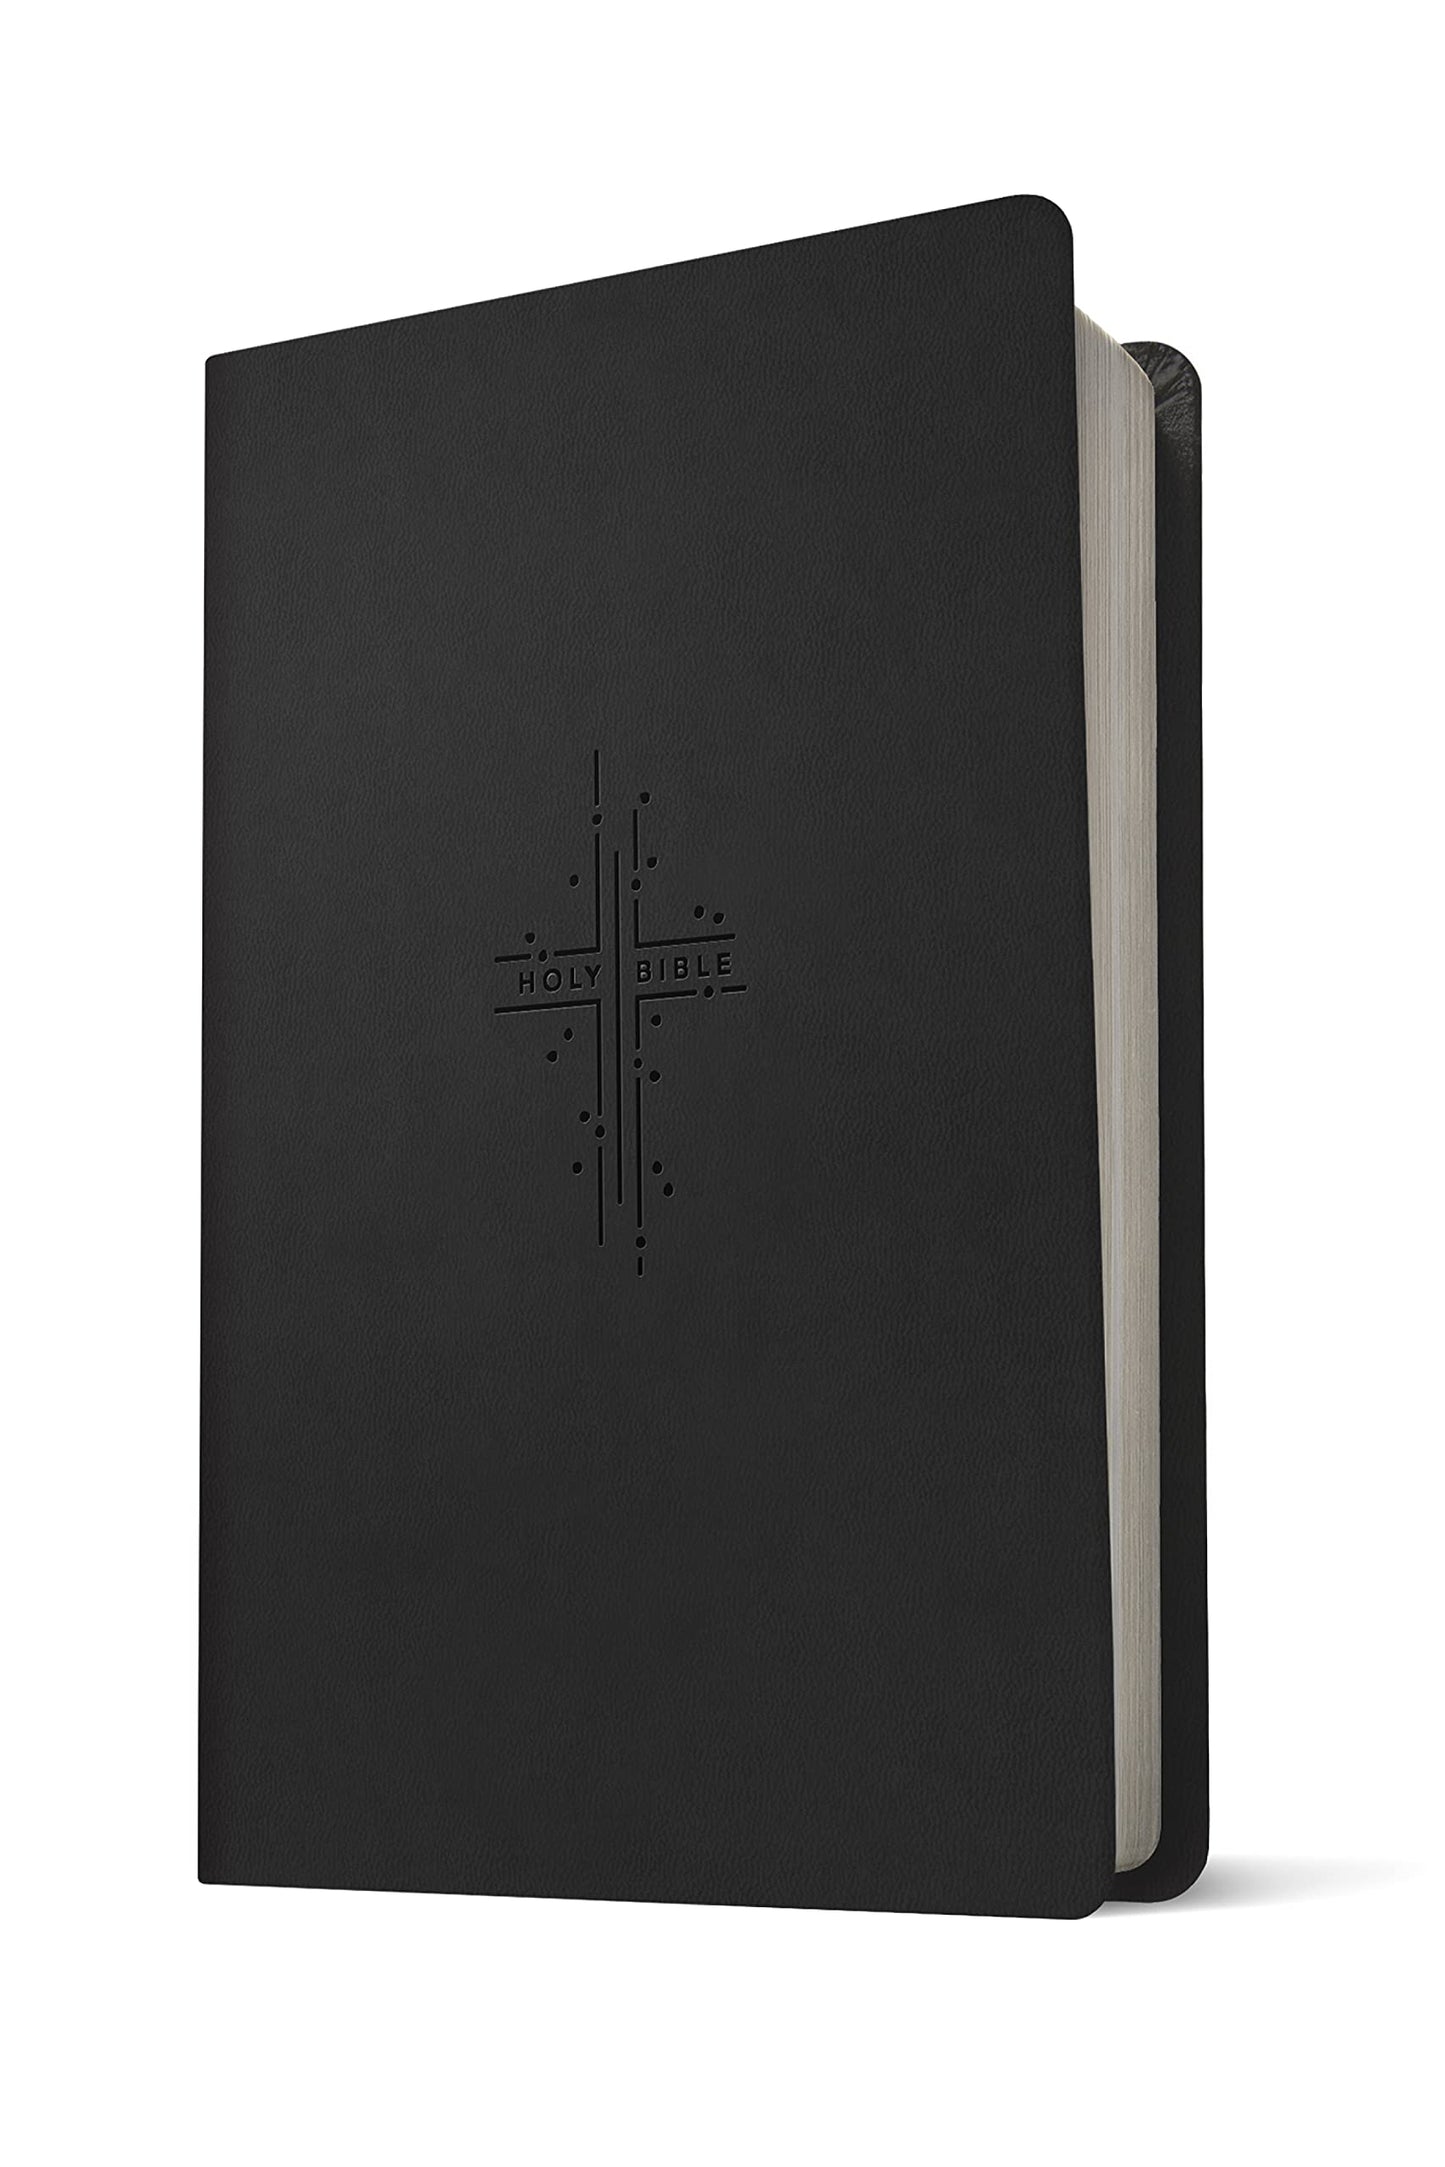 KJV Premium Value Thinline Bible, Filament Enabled Edition (Red Letter, LeatherLike, Black Radiant Cross)